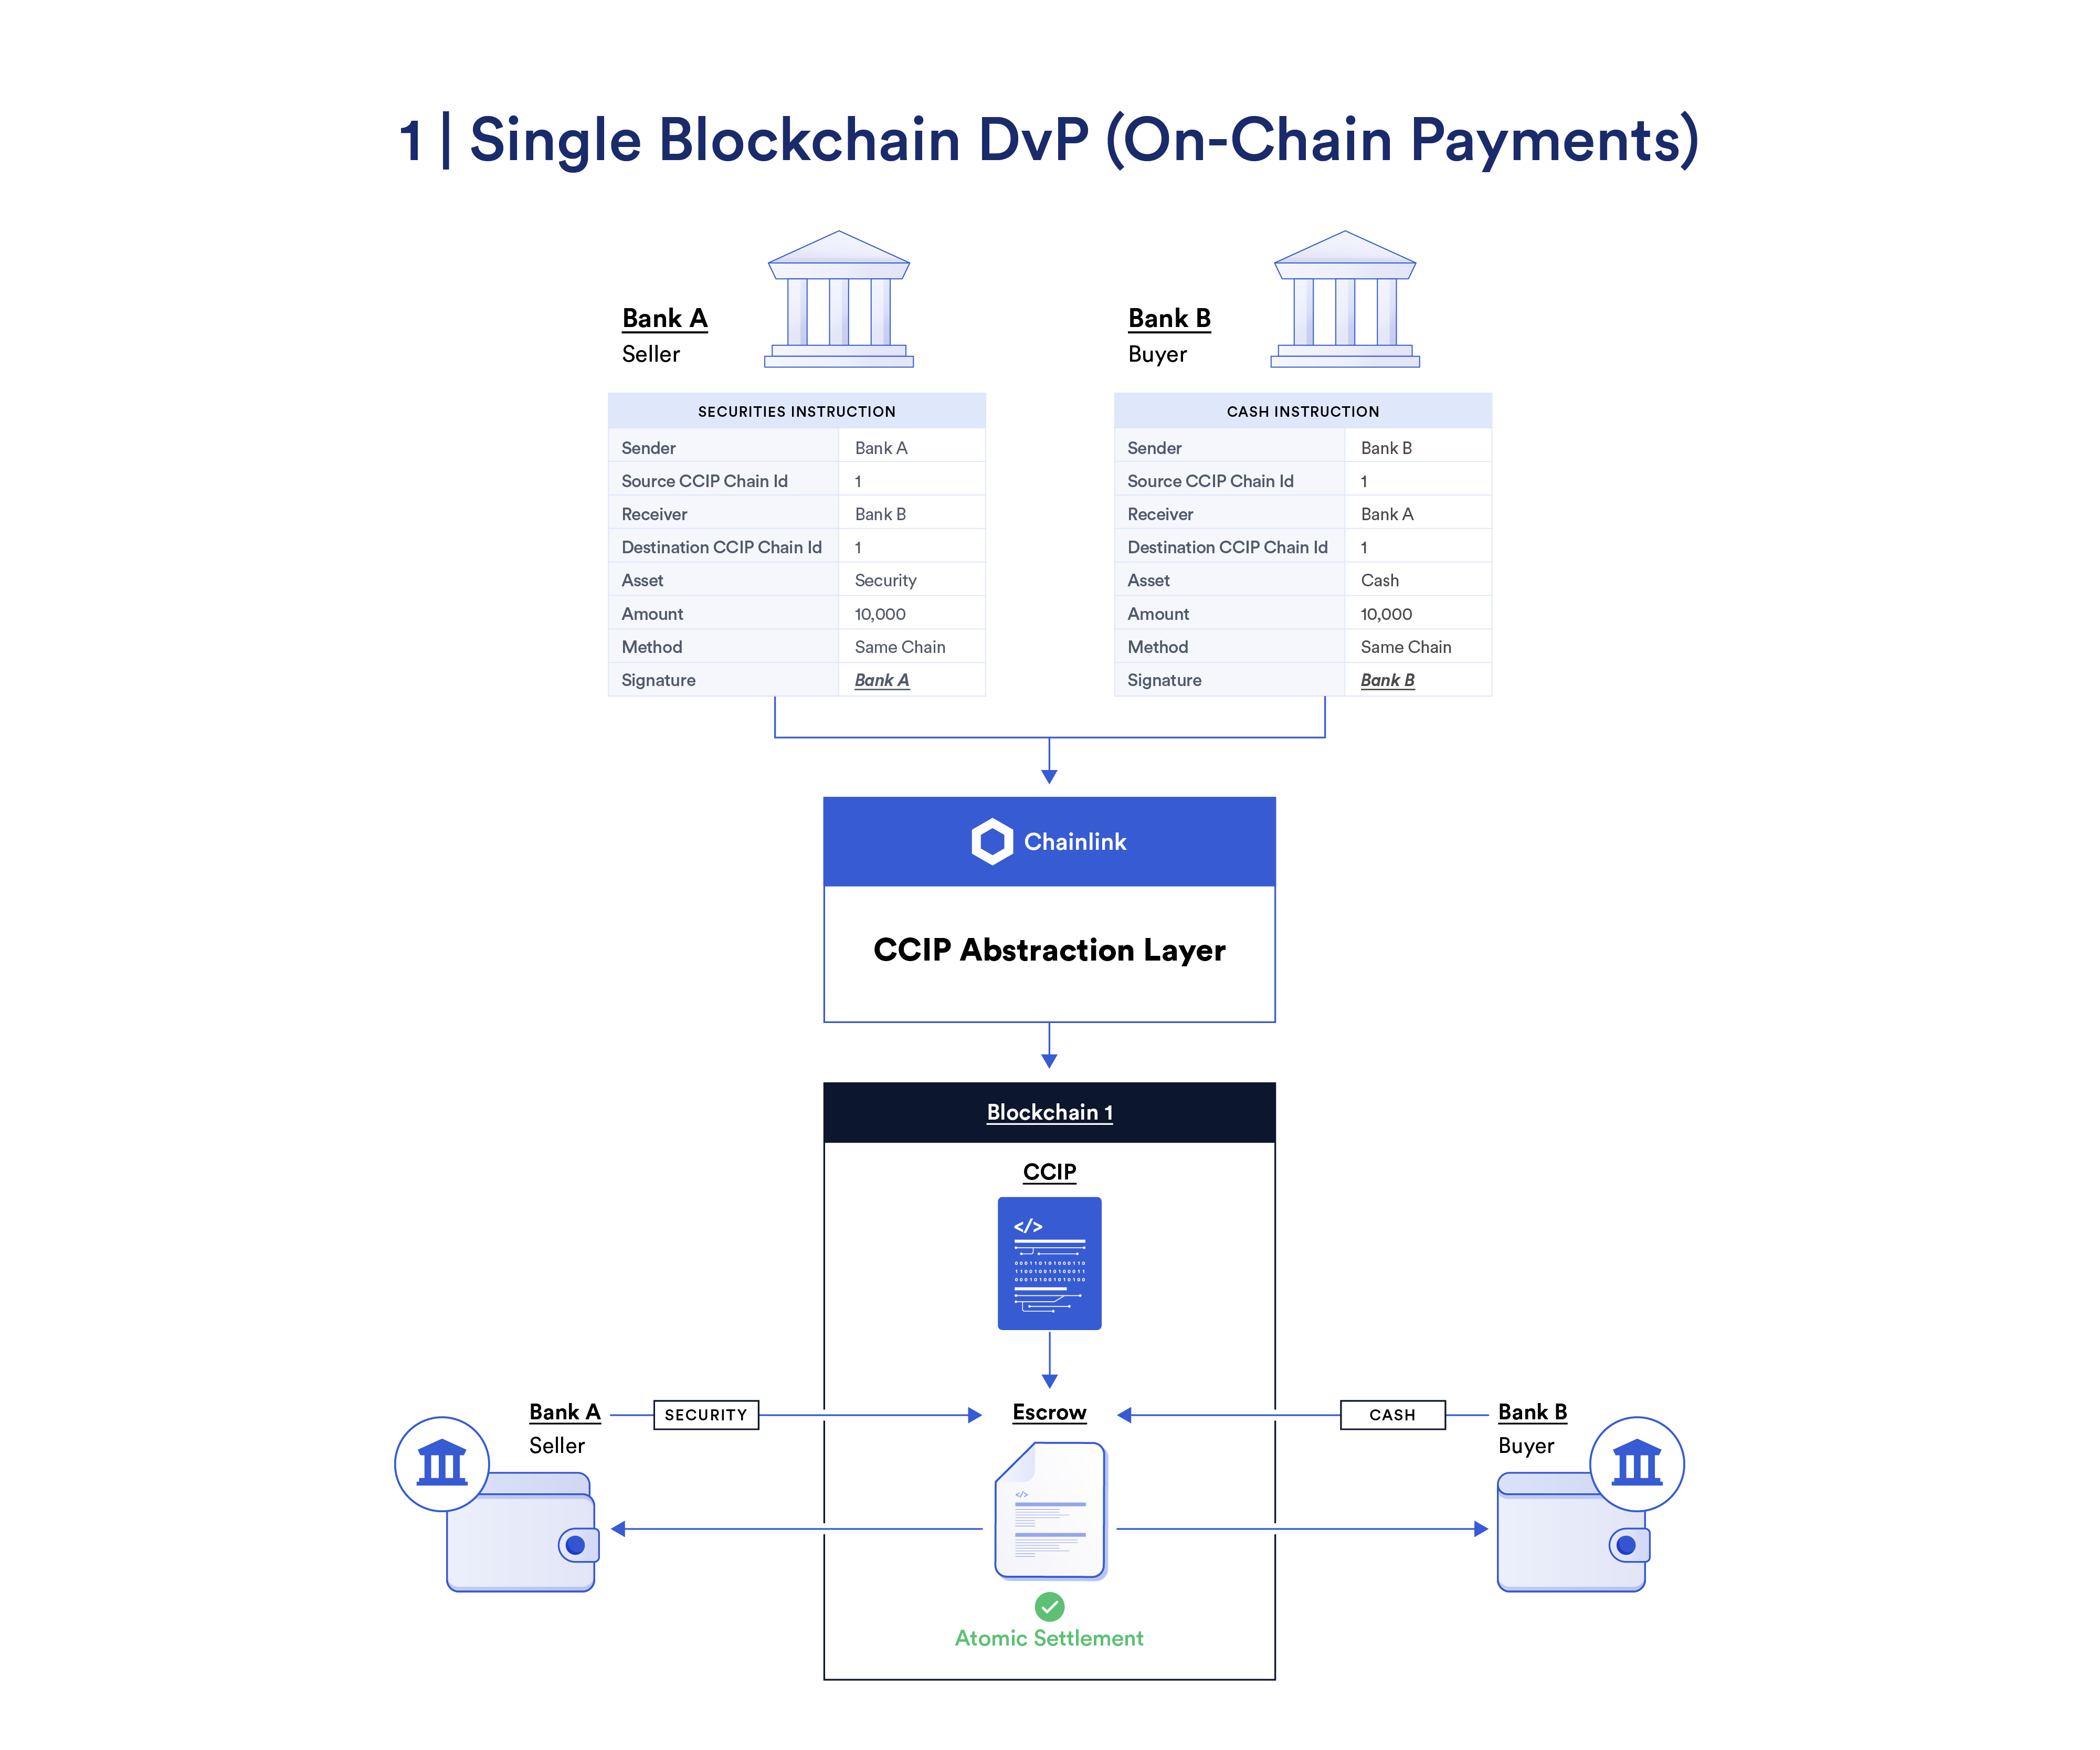 Single blockchain DvP involving on-chain payments.